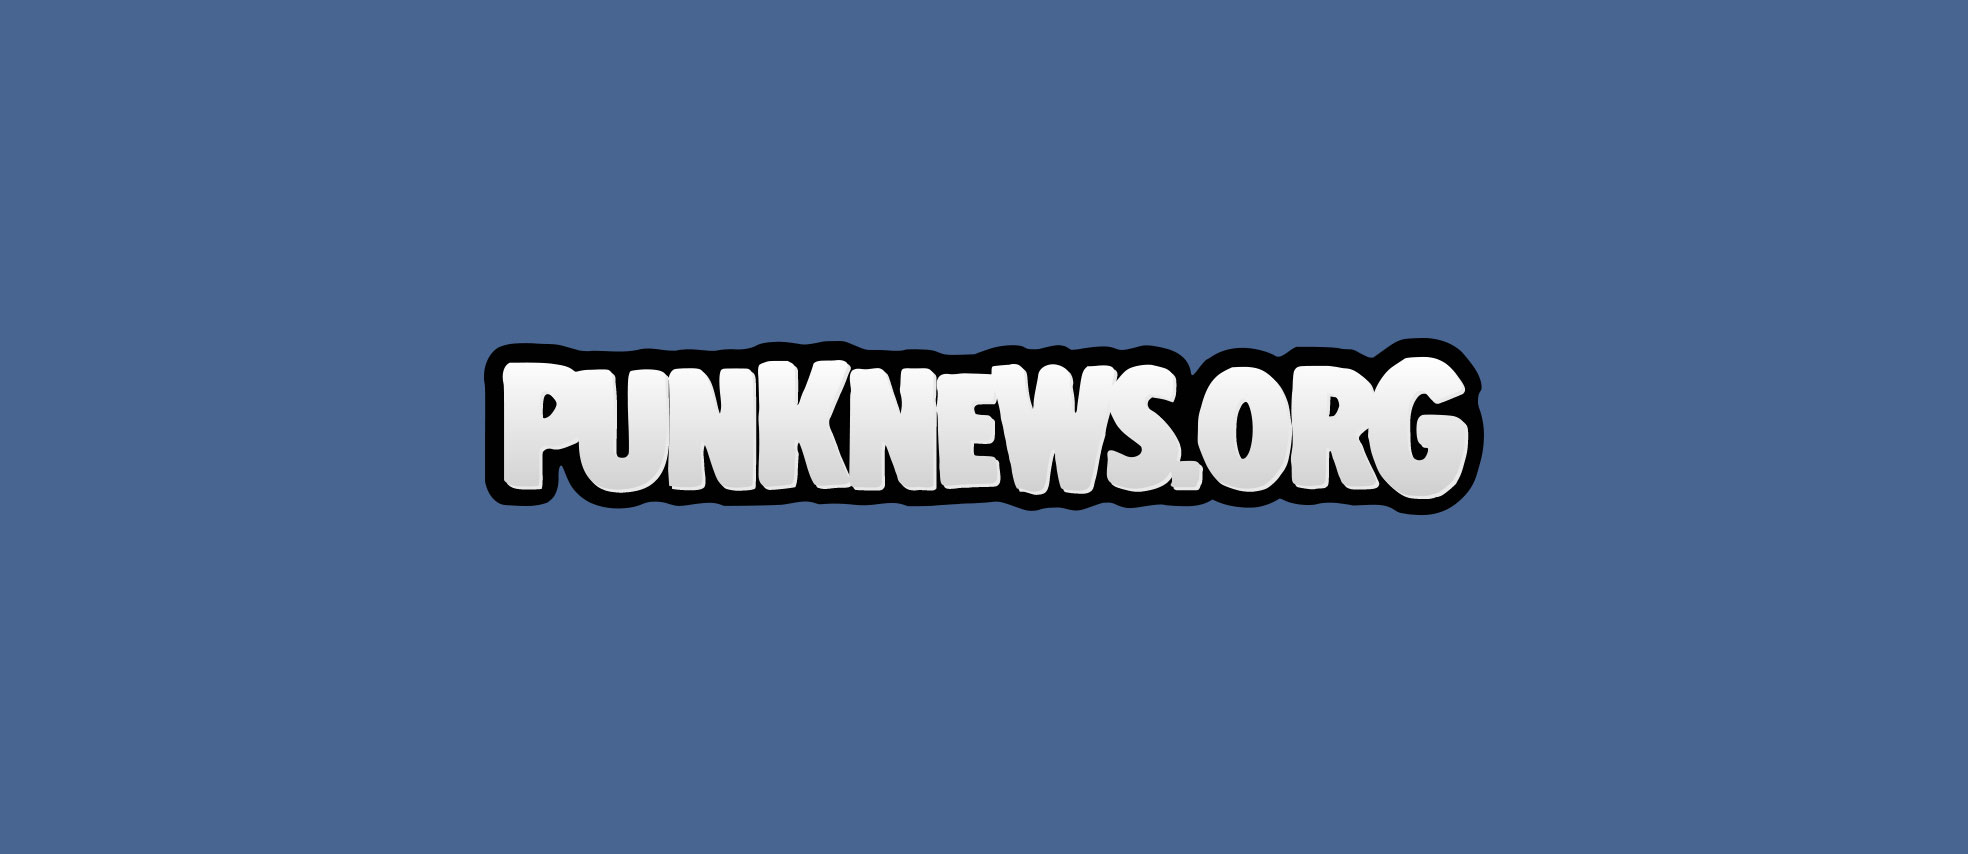 punknews.org